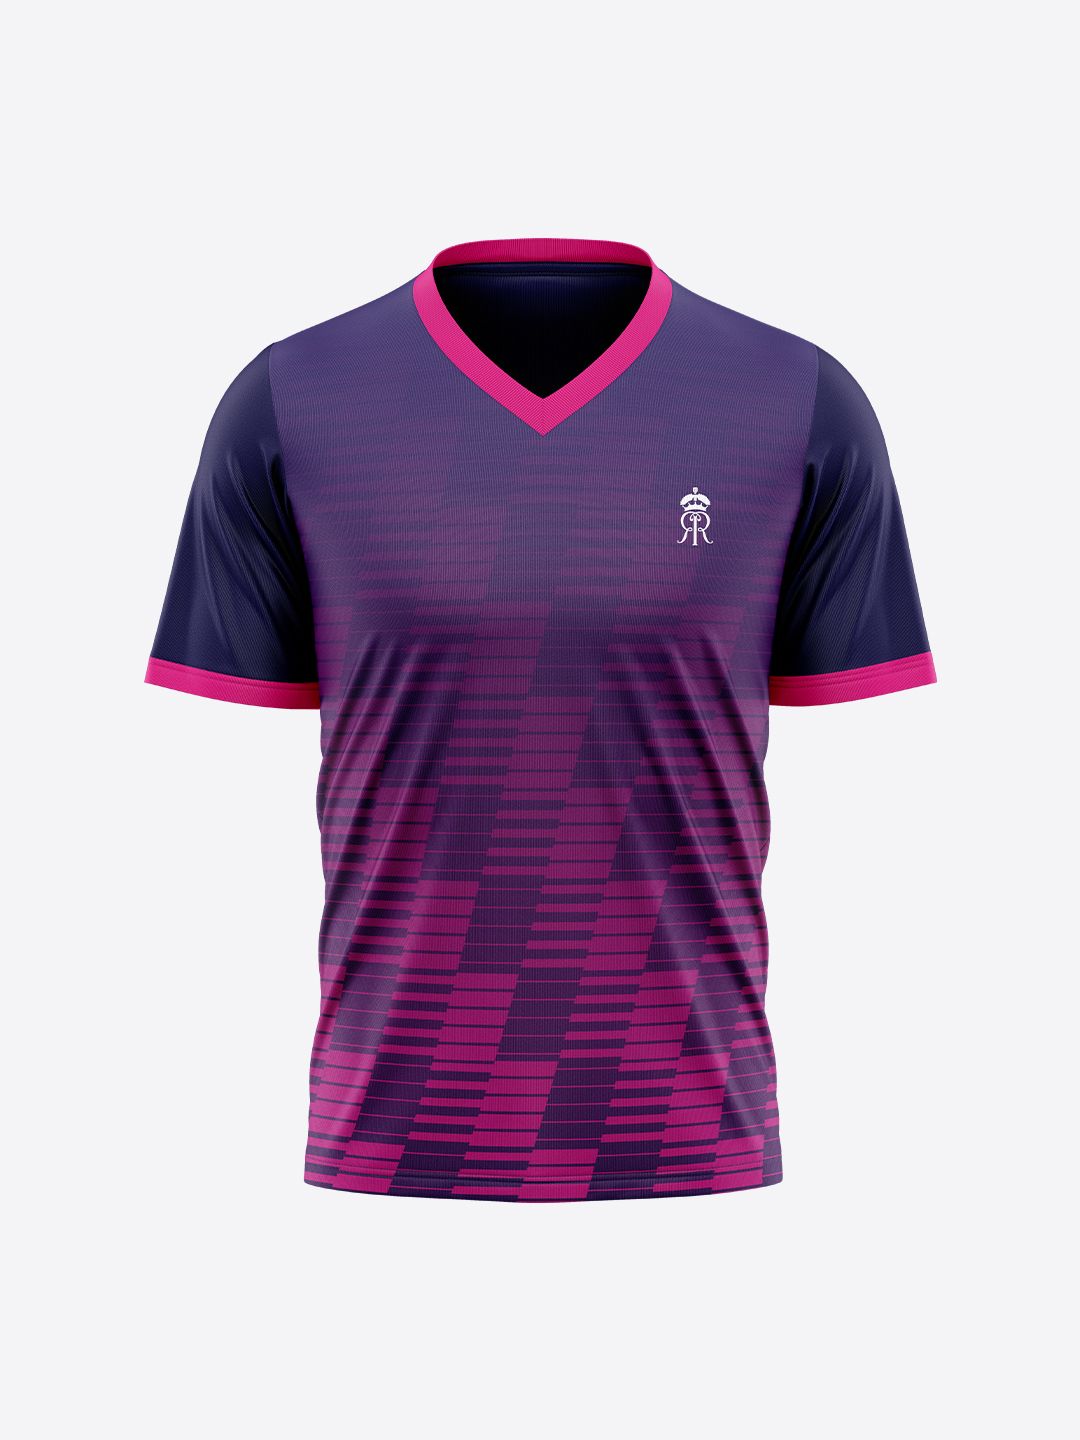 NEXT PRINT Unisex Cricket Jersey Half Sleeve Name Team Name Number Half  Sleeve Football Shirt at Rs 199/piece, Football Jersey in Bengaluru